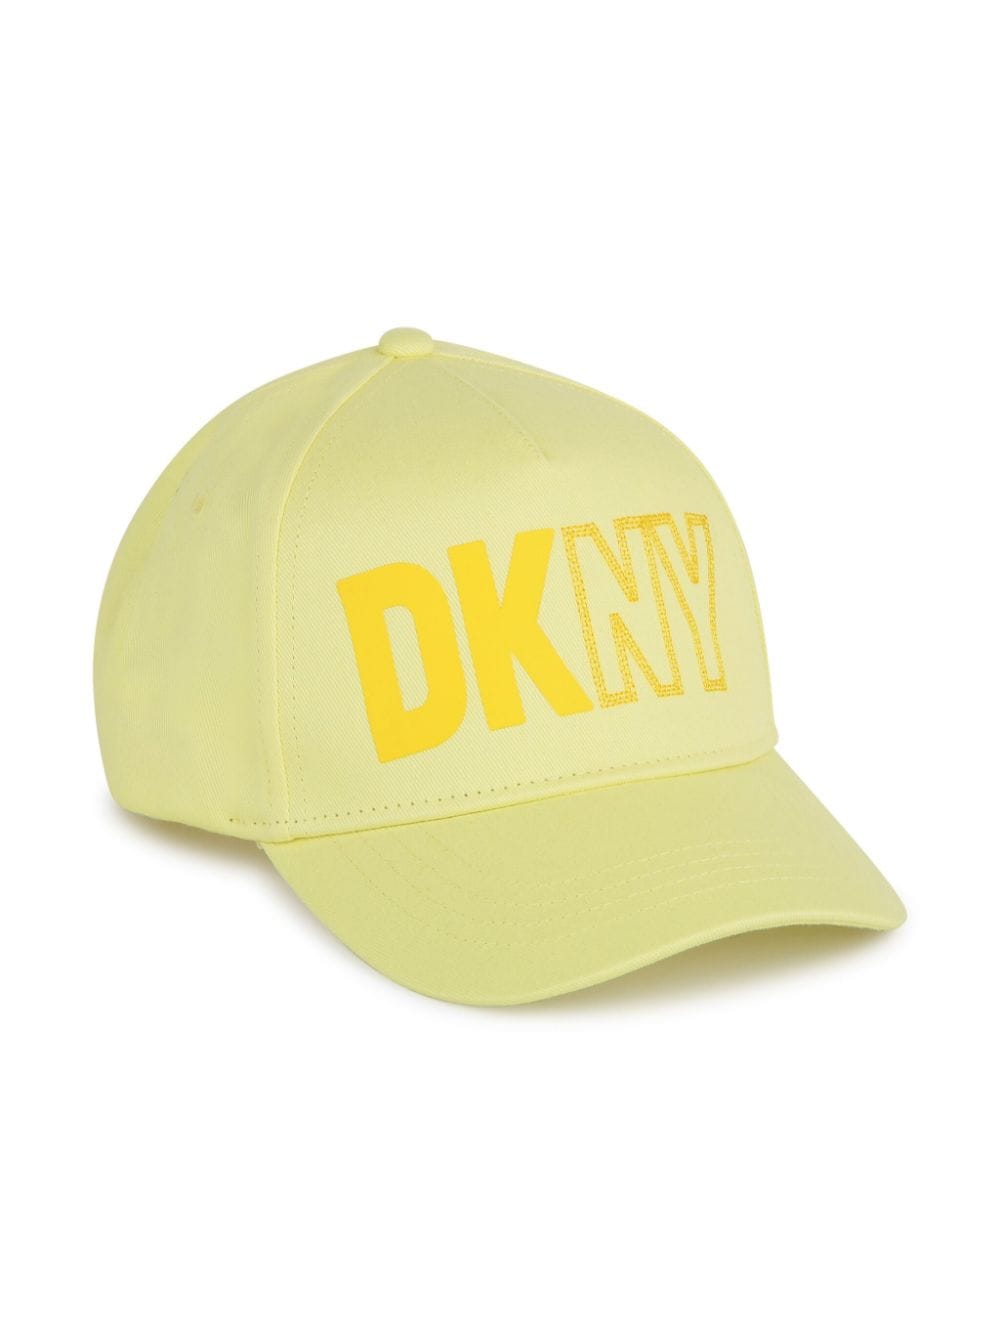 Image 1 of Dkny Kids logo-print cotton twill cap